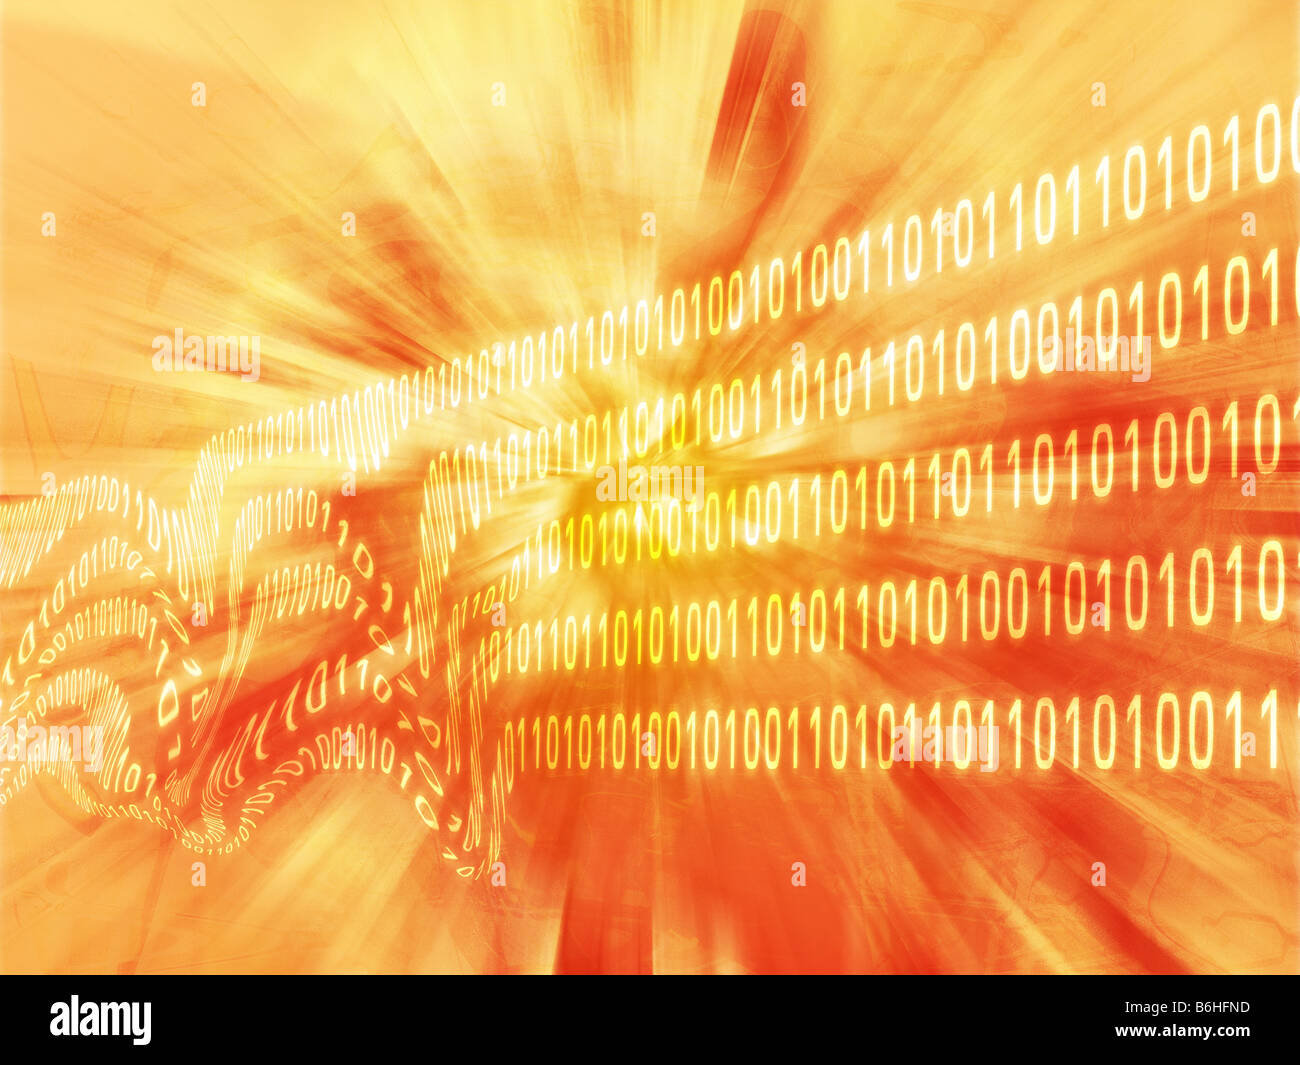 Illustration of corrupt data damaged binary information Stock Photo